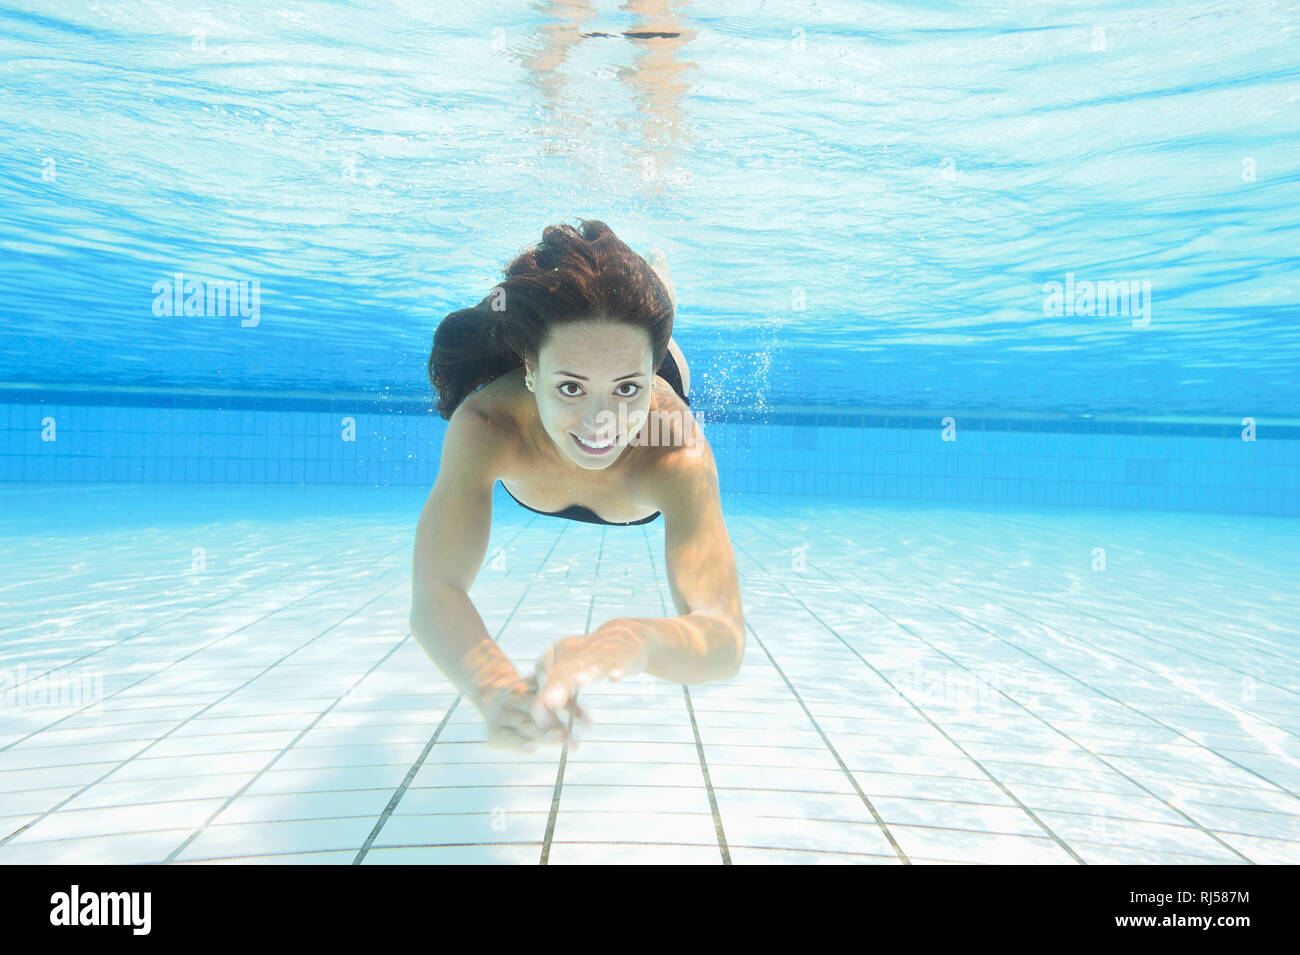 Frau, jung, Bikini, Freibad, Unterwasser, frontal, schwimmen, Blick Kamera Stock Photo